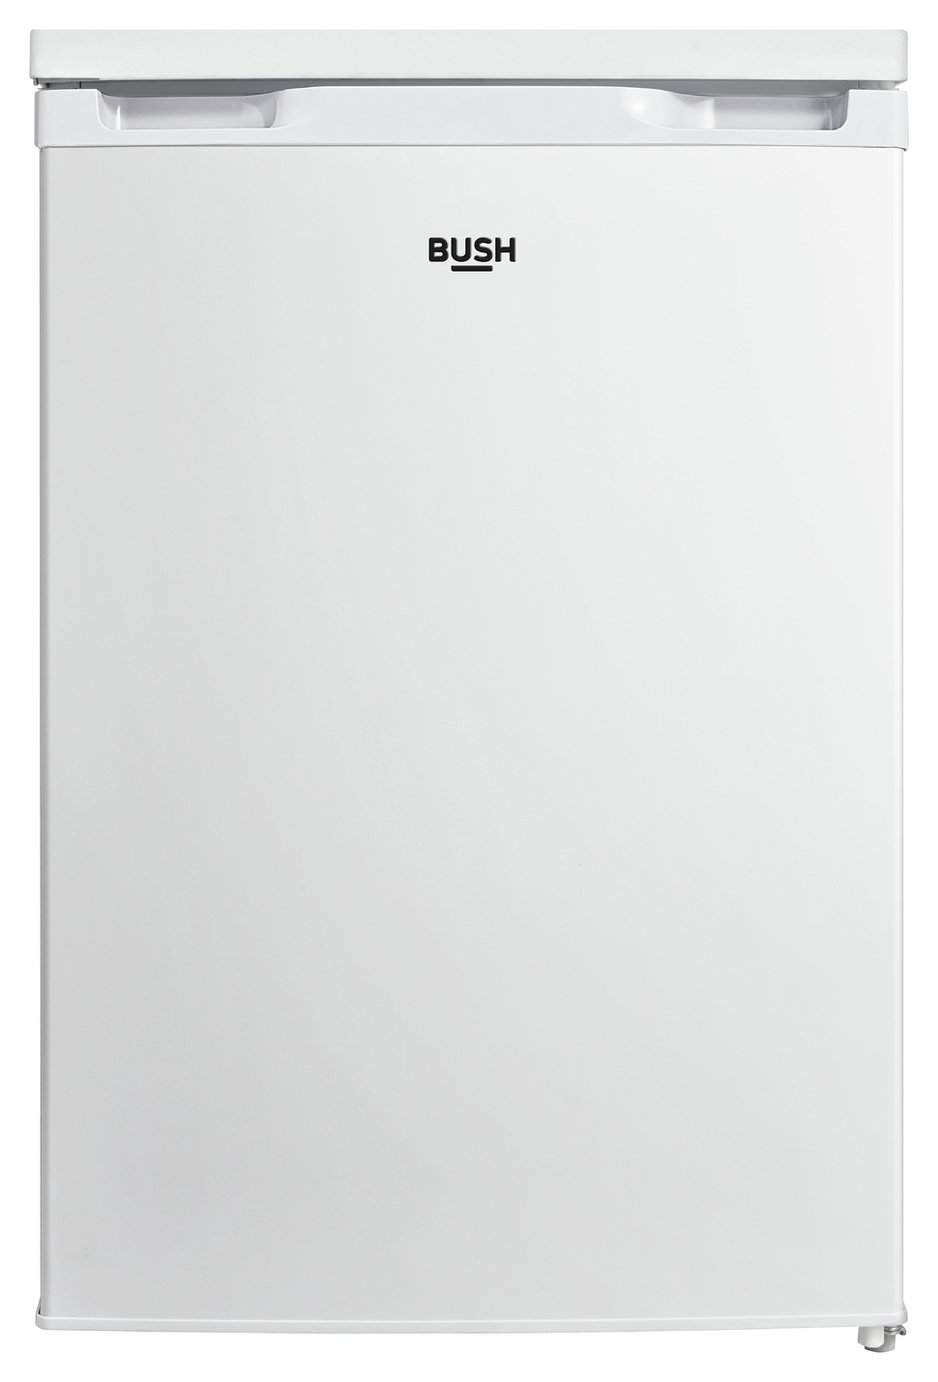 Bush NE5585UCFR Under Counter Freezer - White